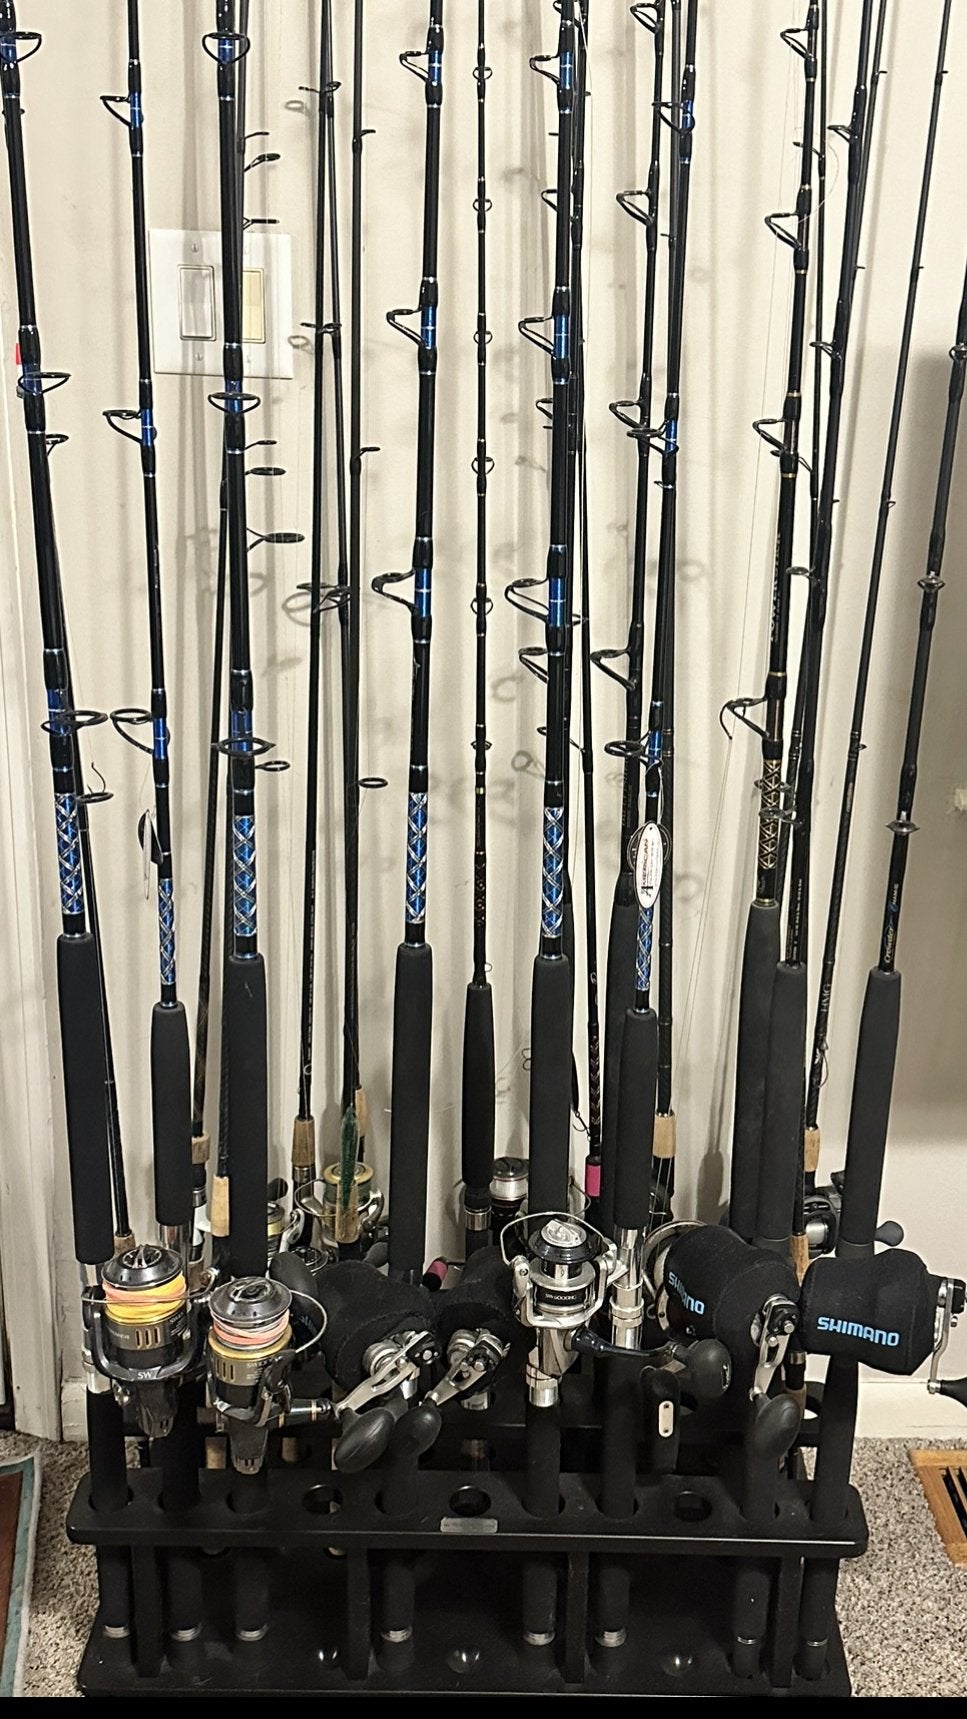 Show me ypur fishing rod storage